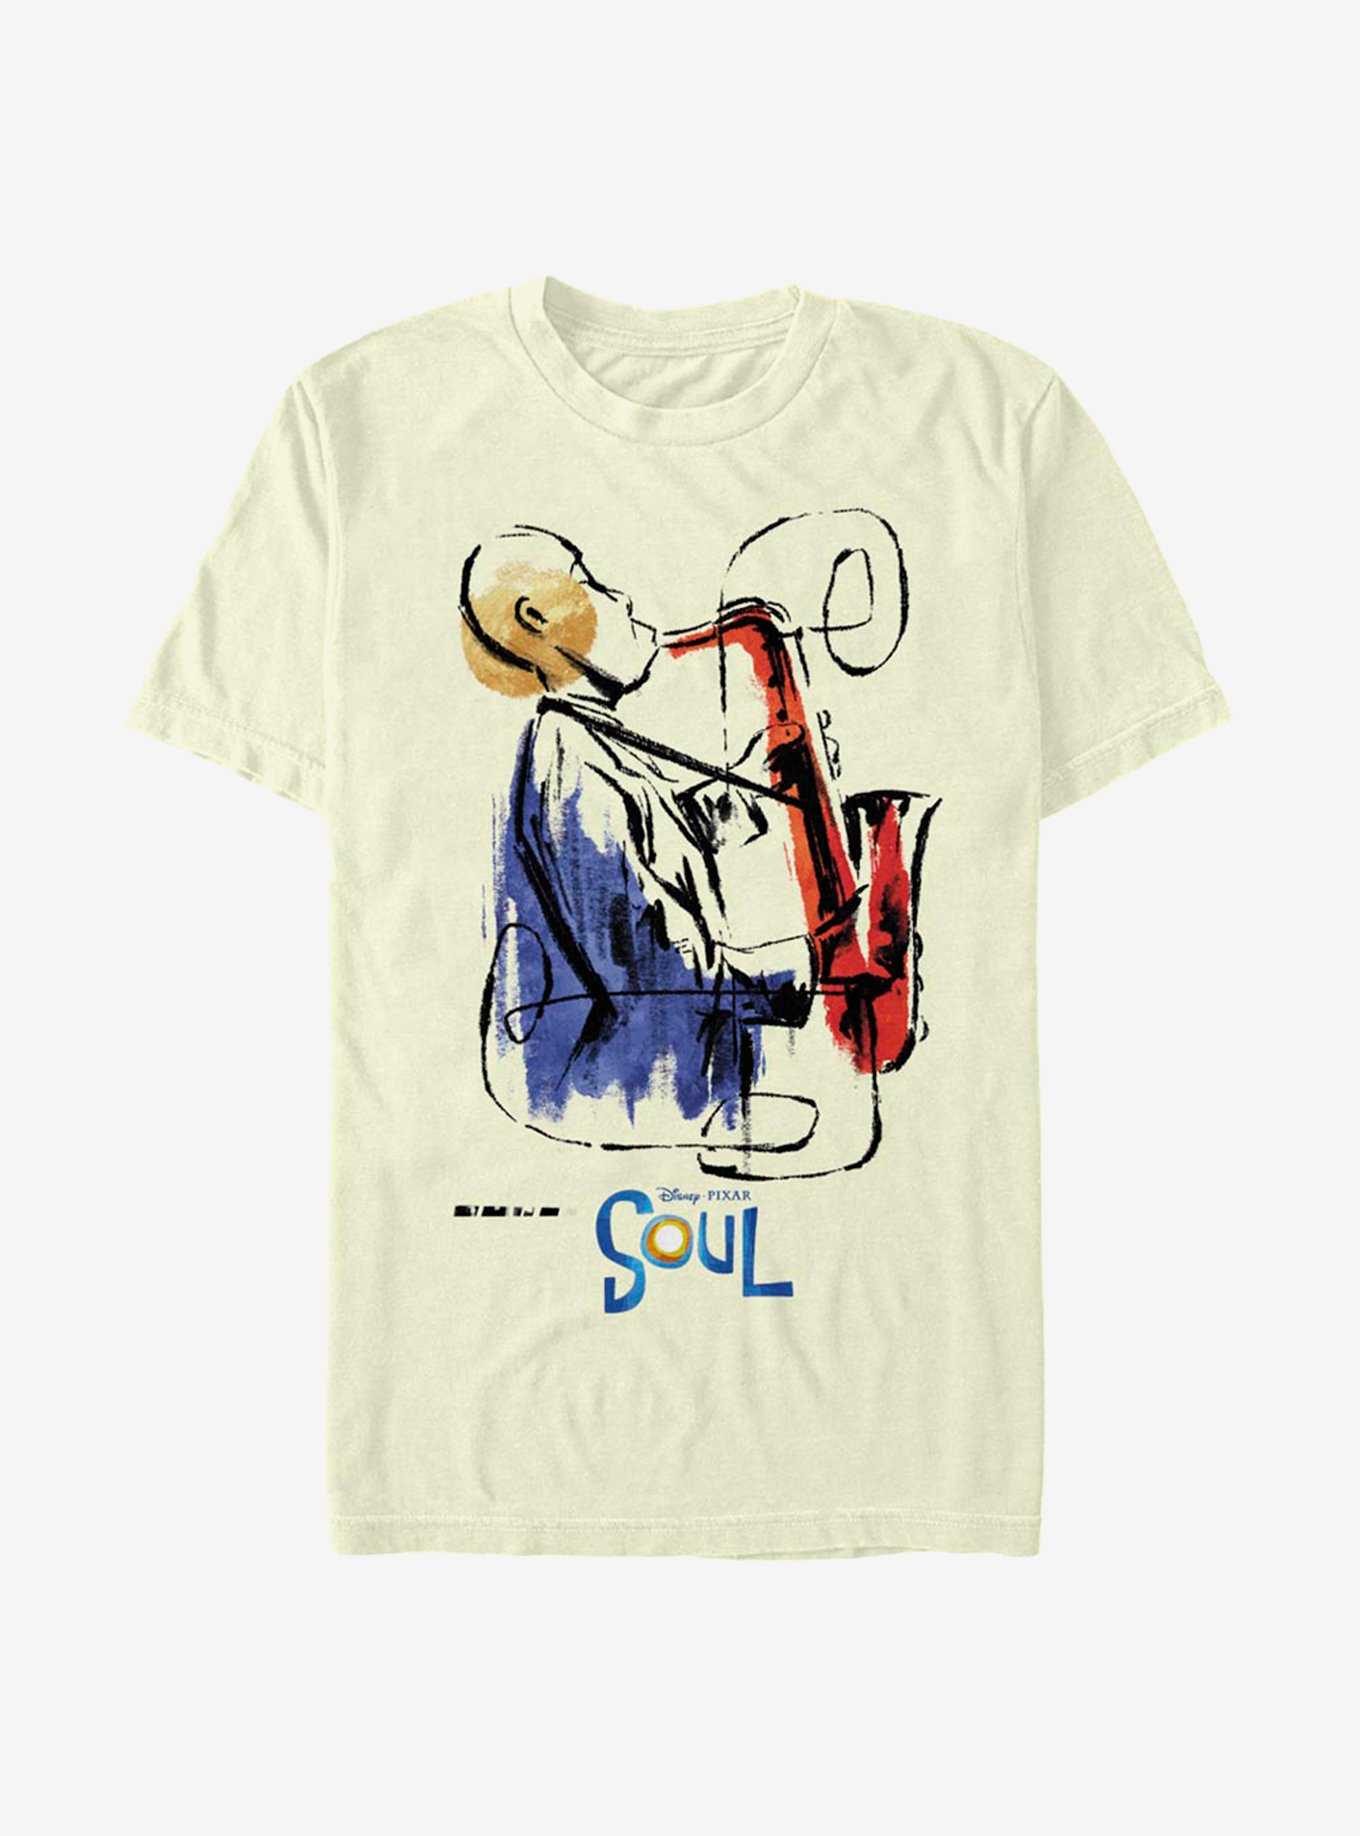 Disney Pixar Soul Sax Painting T-Shirt, , hi-res